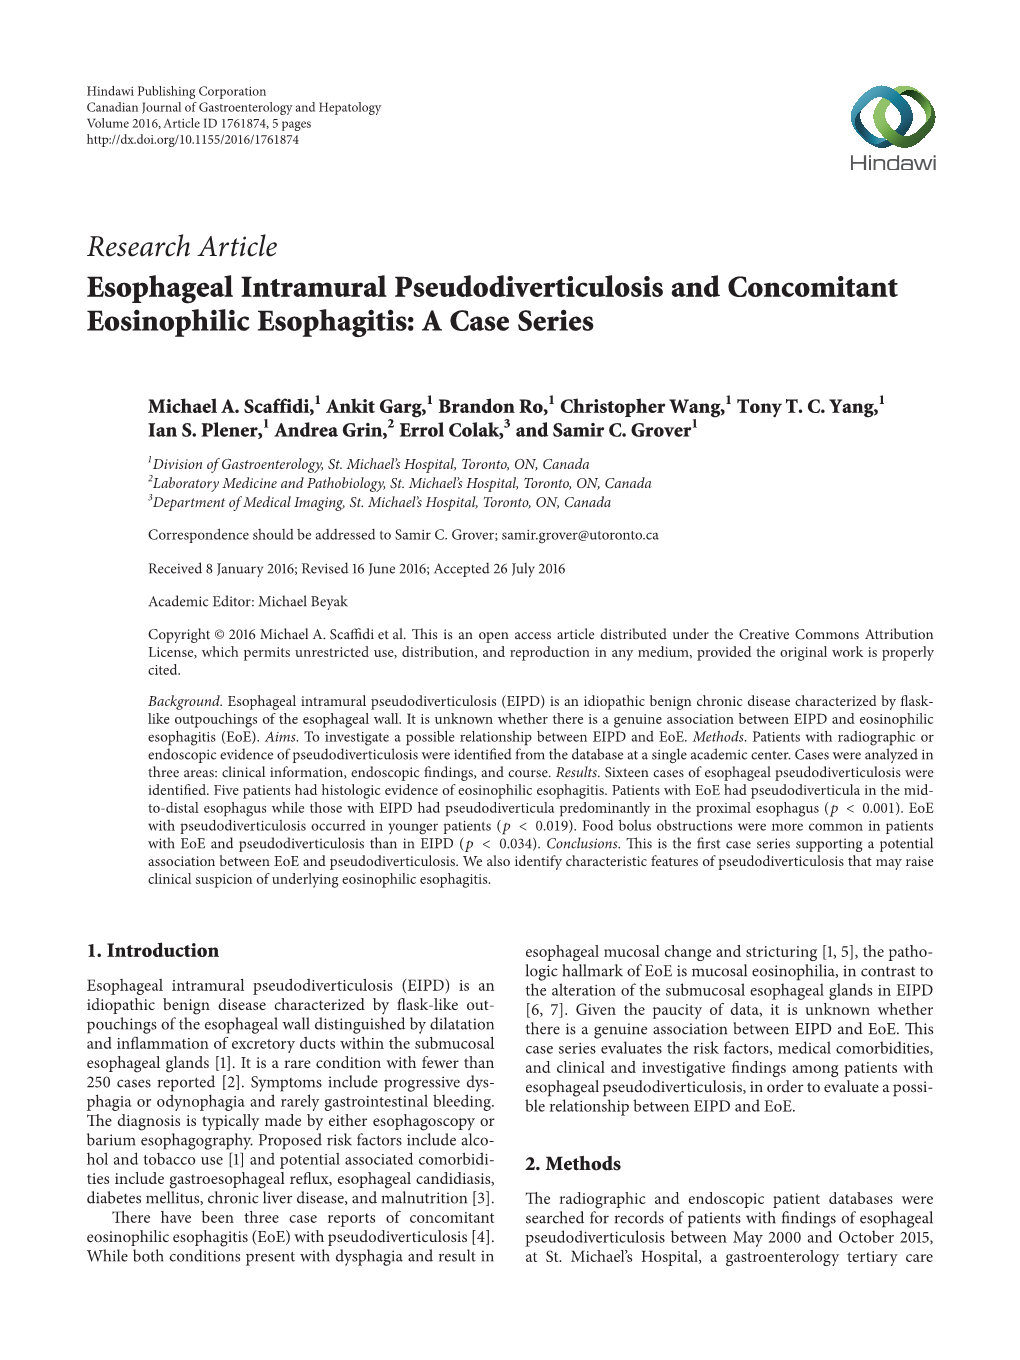 Esophageal Intramural Pseudodiverticulosis and Concomitant Eosinophilic Esophagitis: a Case Series